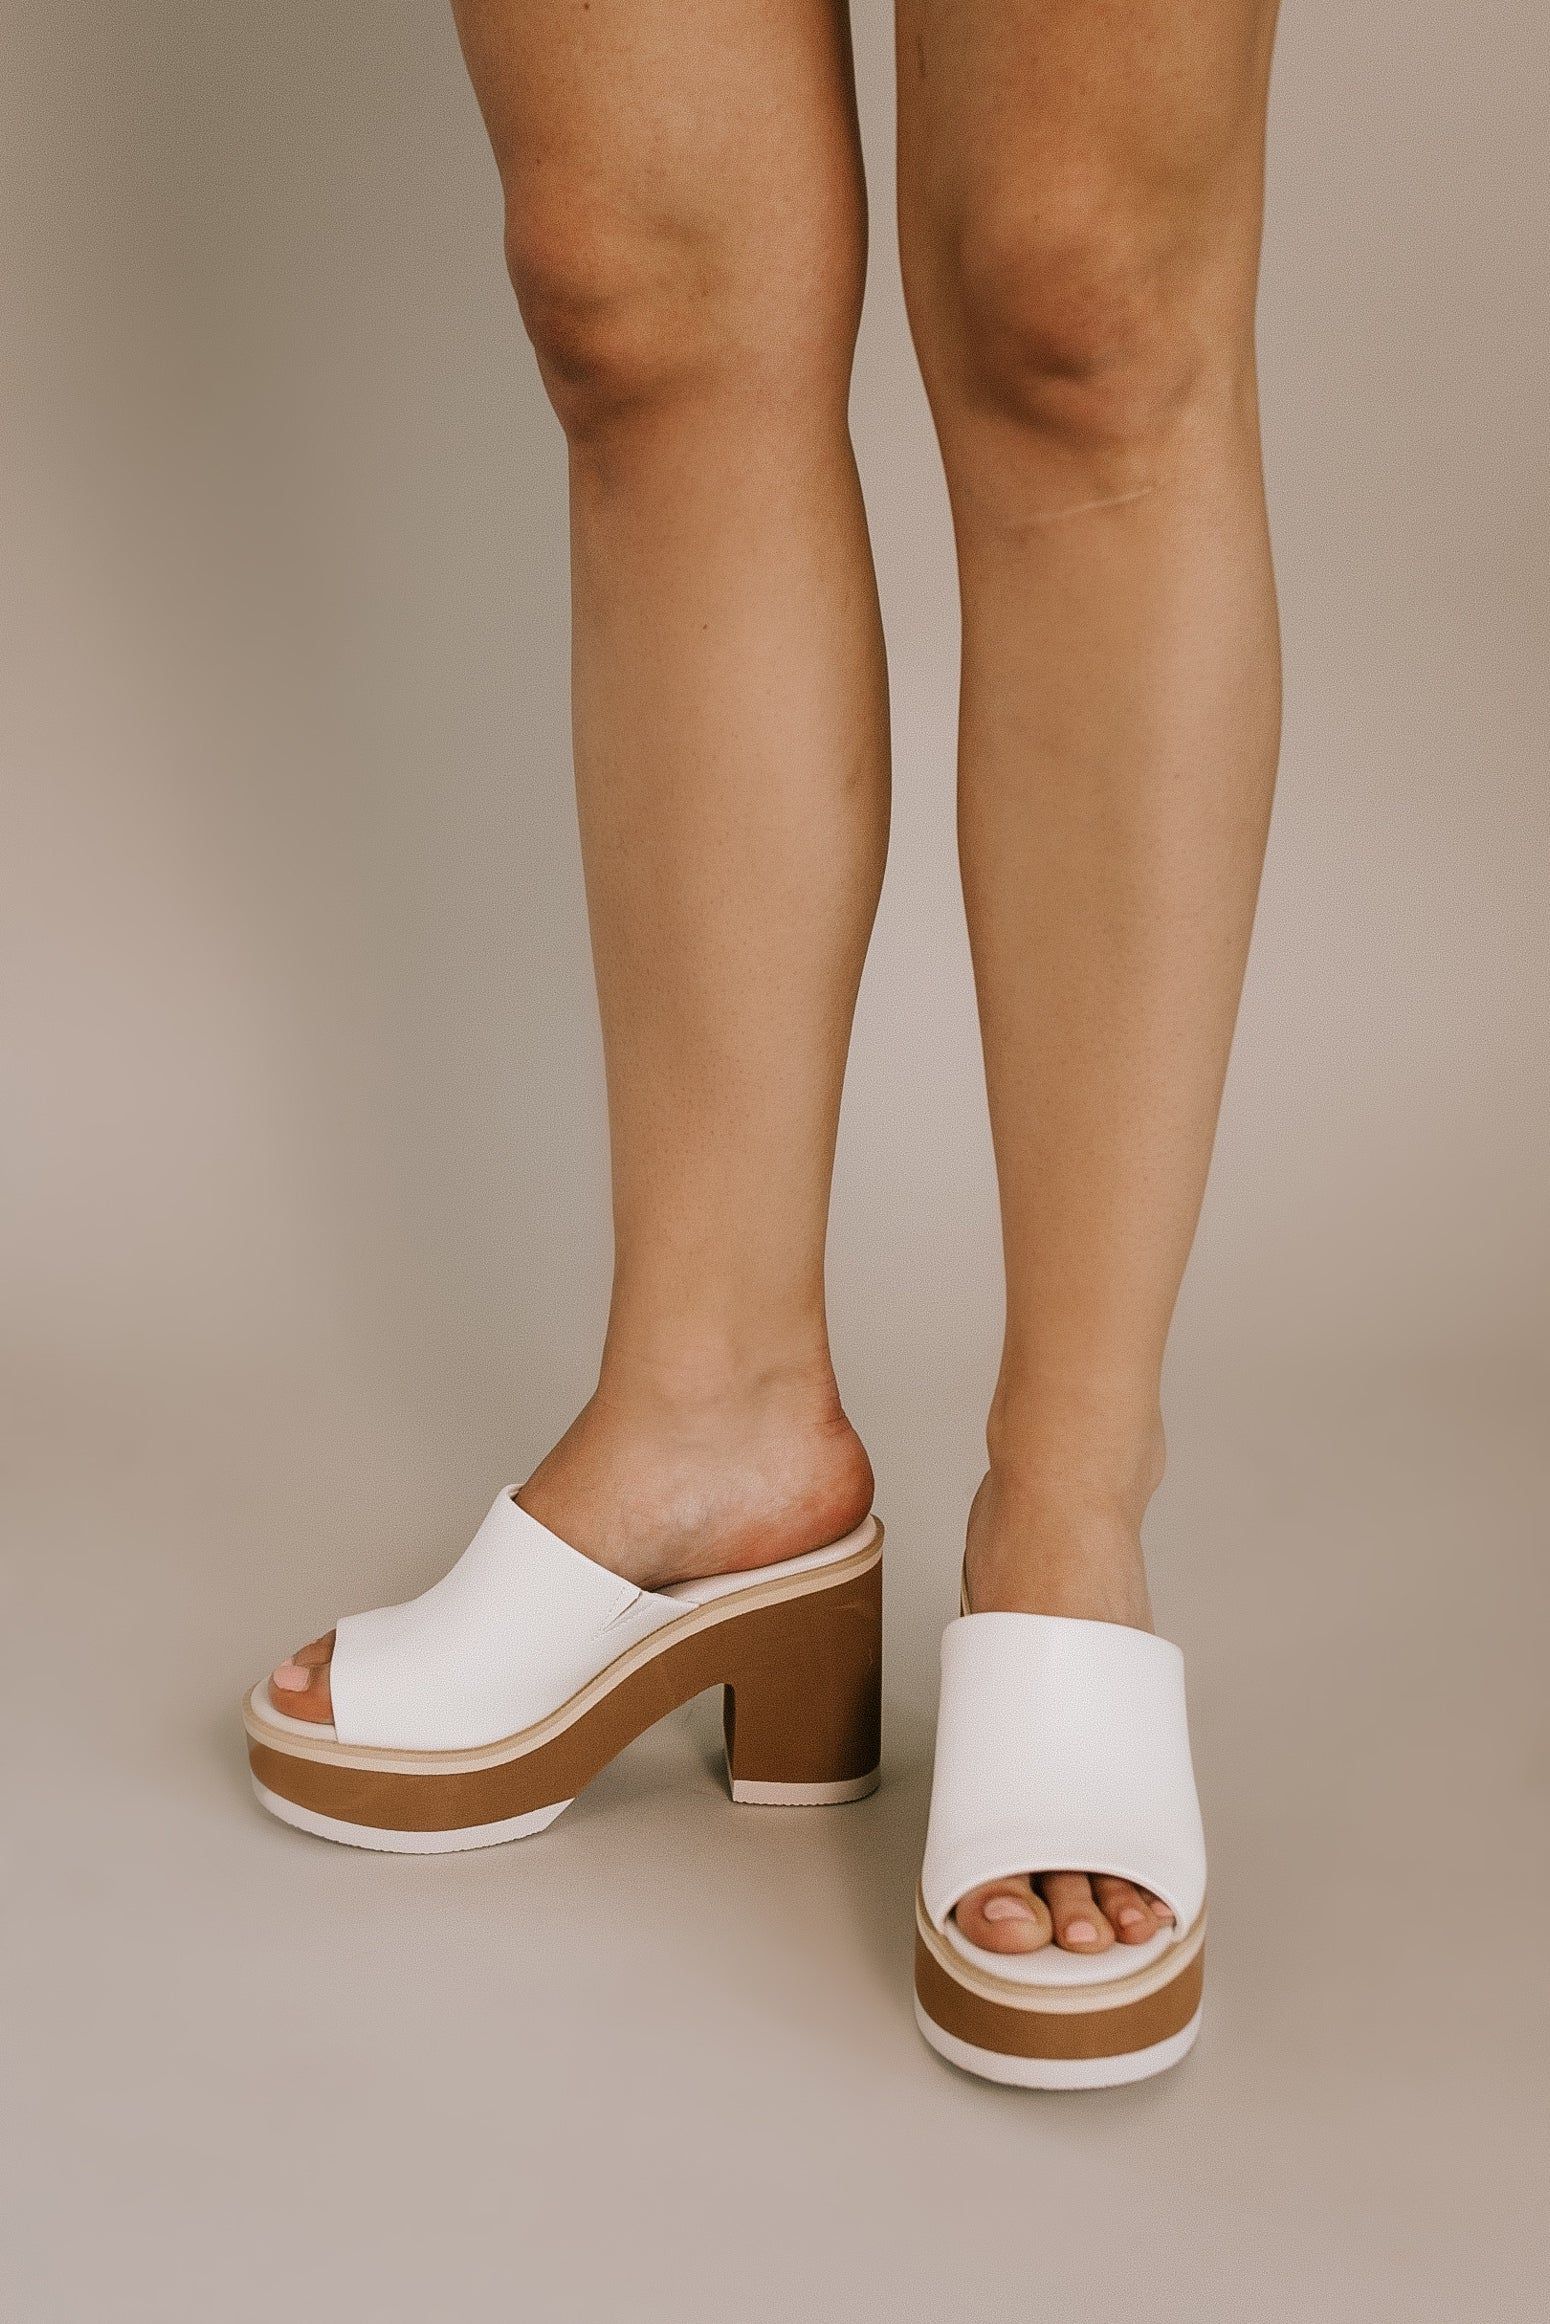 Vito Platform Heel - White | THELIFESTYLEDCO